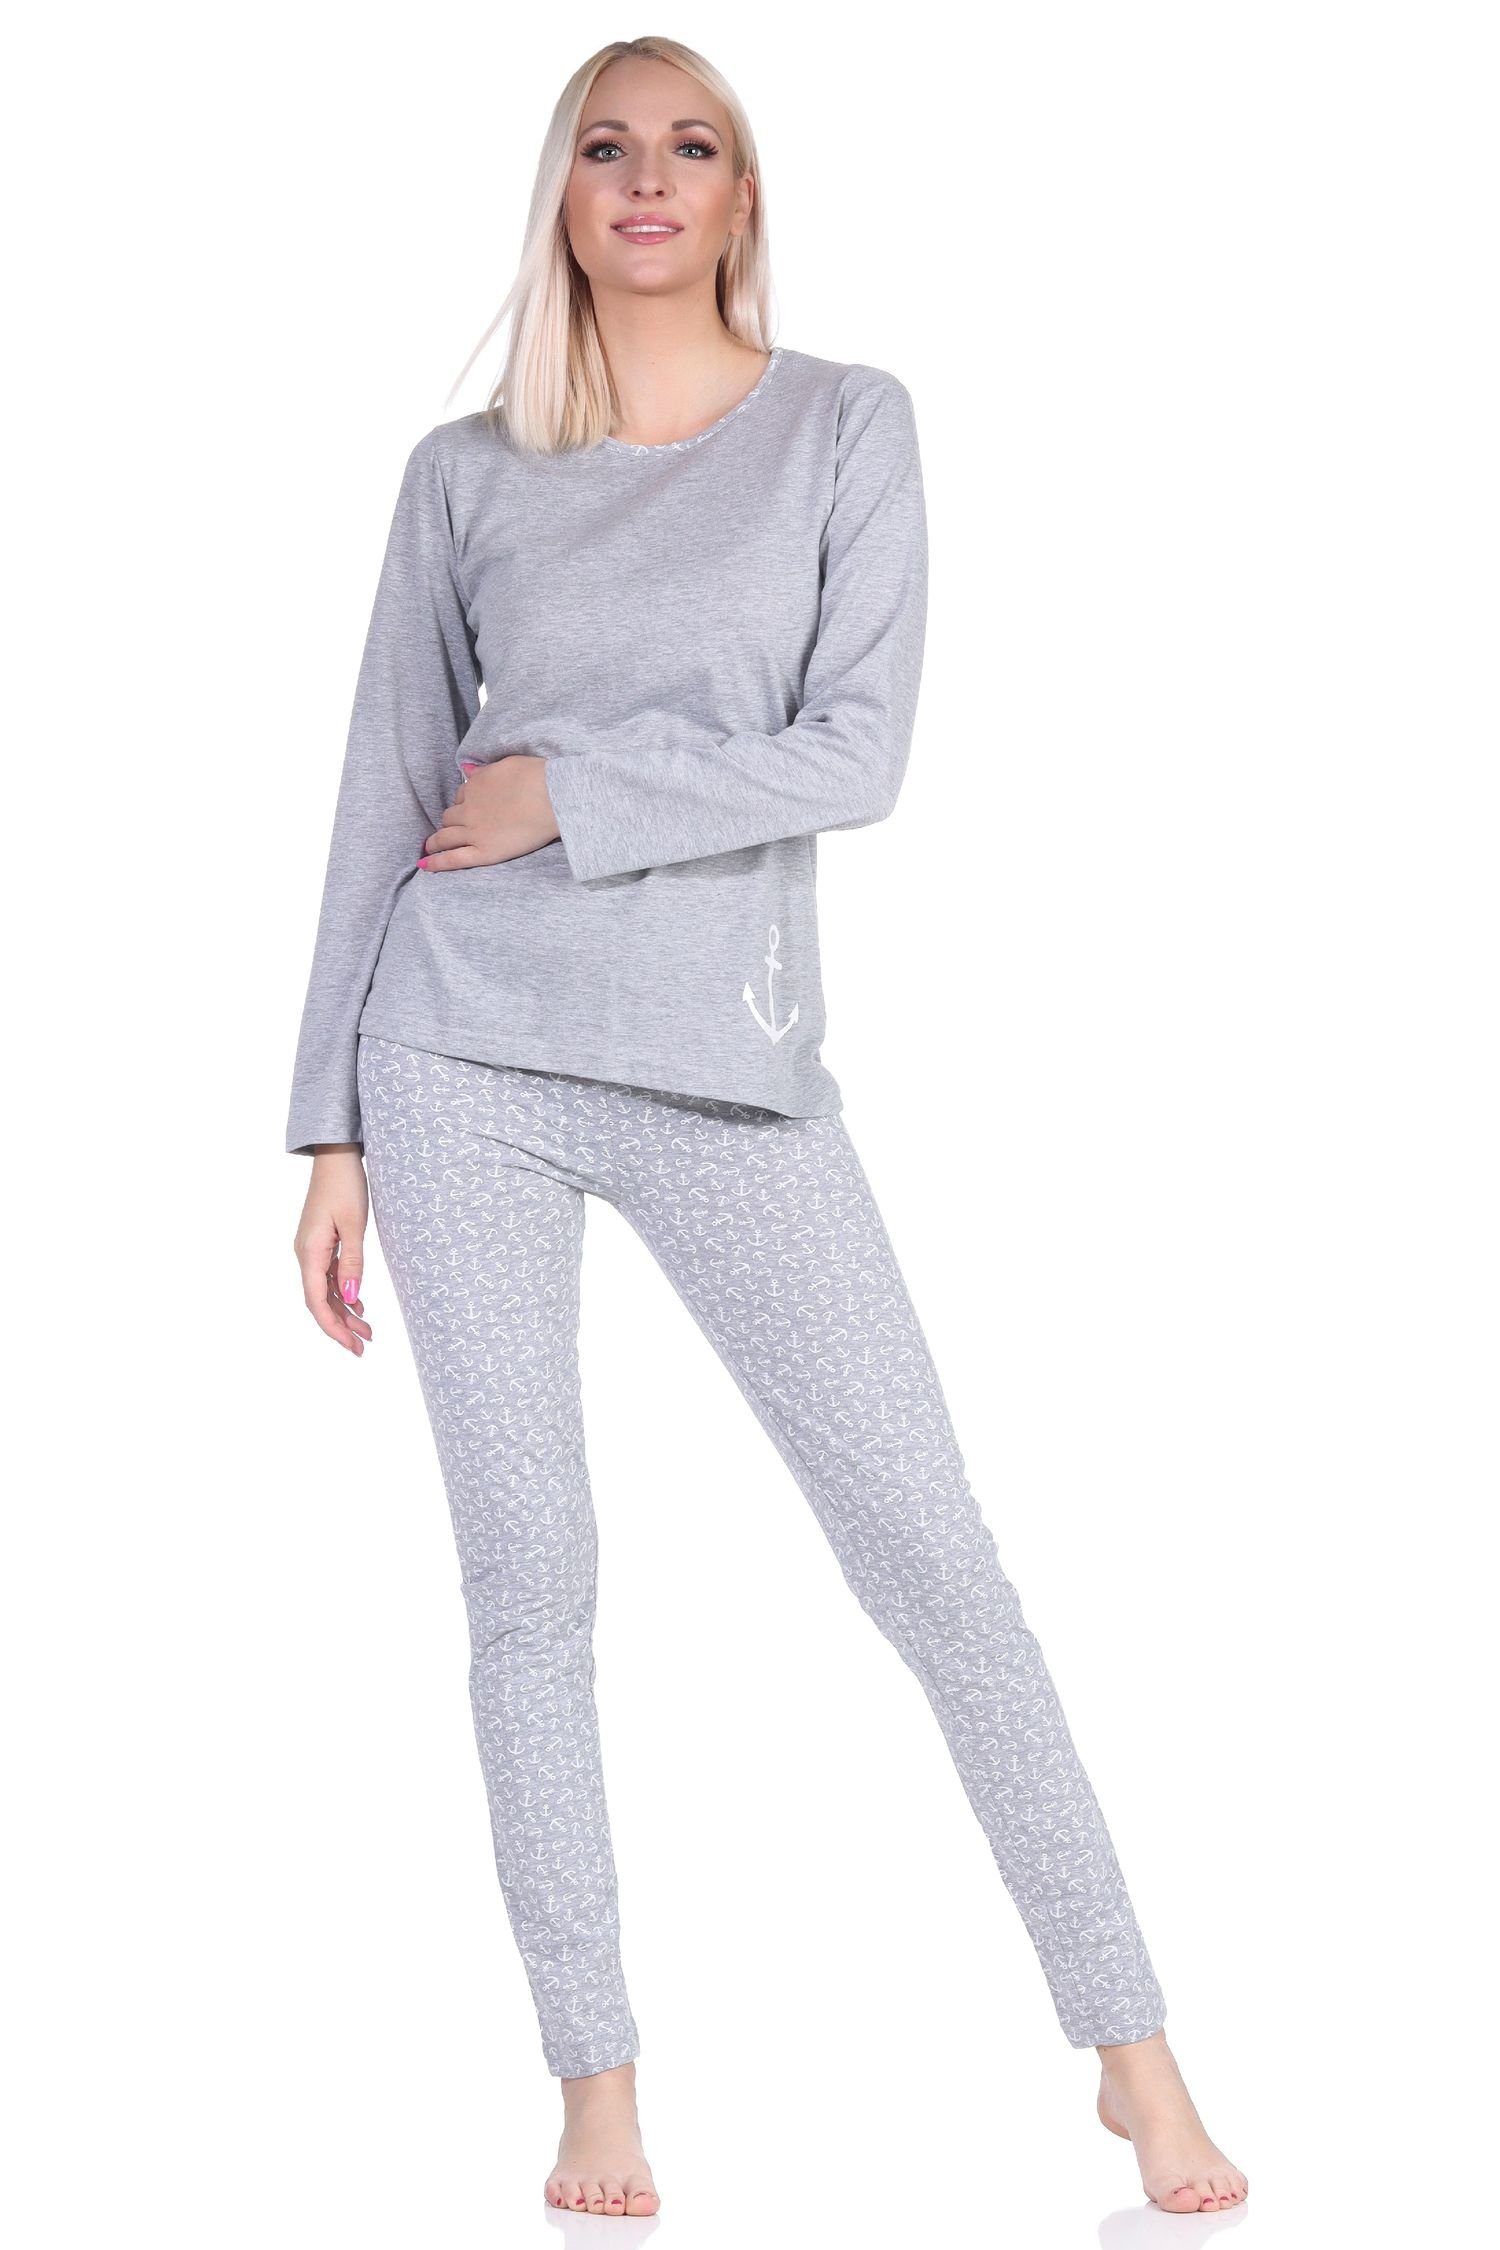 langarm Schlafanzug zeitlosem 712 112 by in - RELAX Damen 10 Pyjama Normann grau maritimen Look